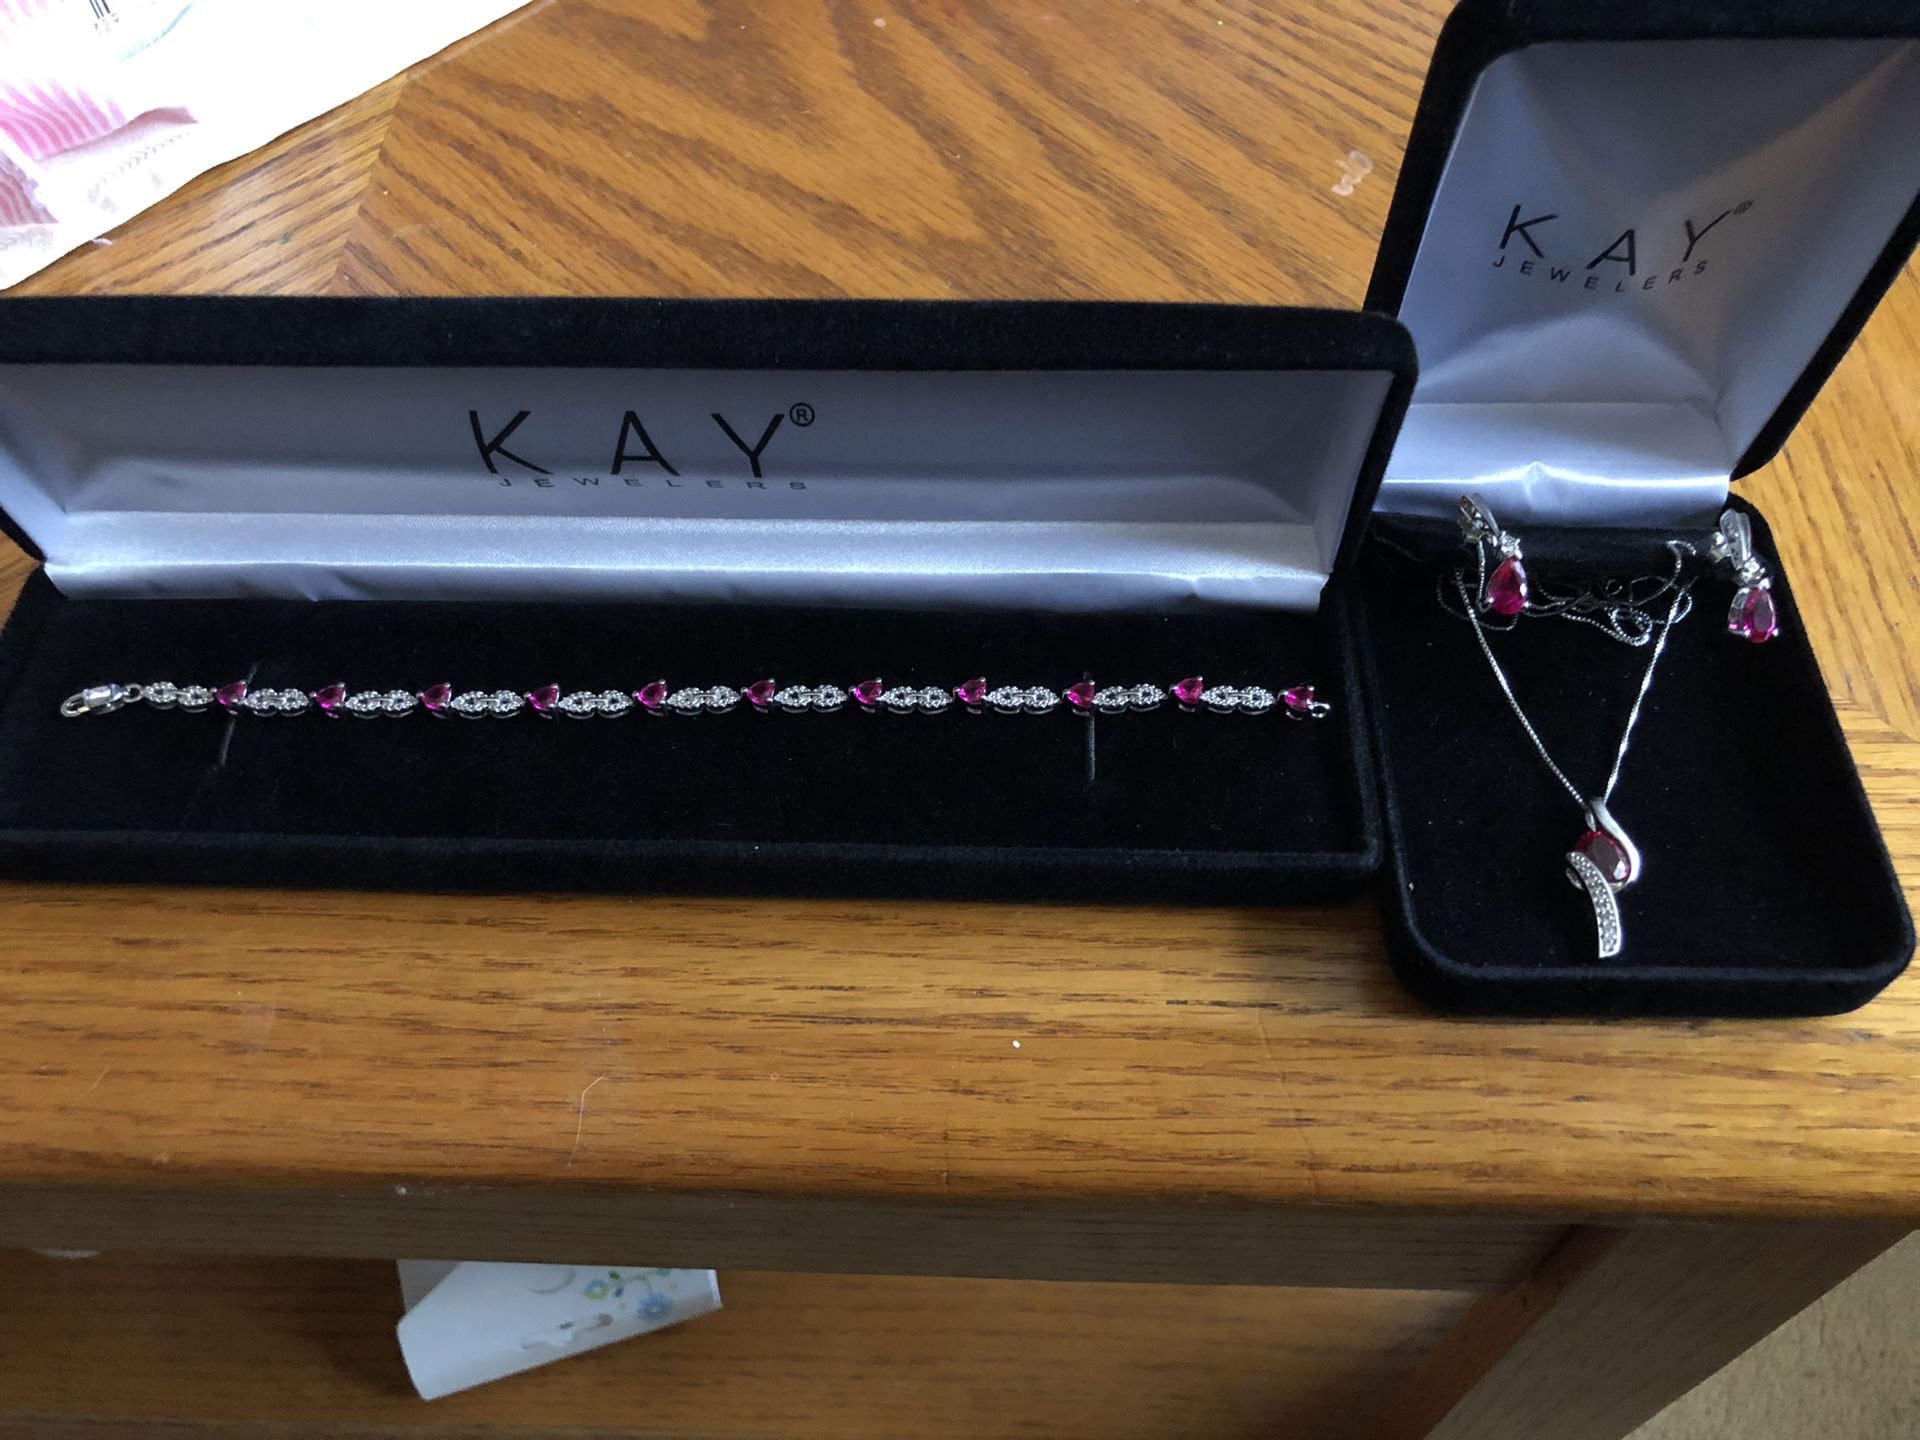 Kay jewelers!